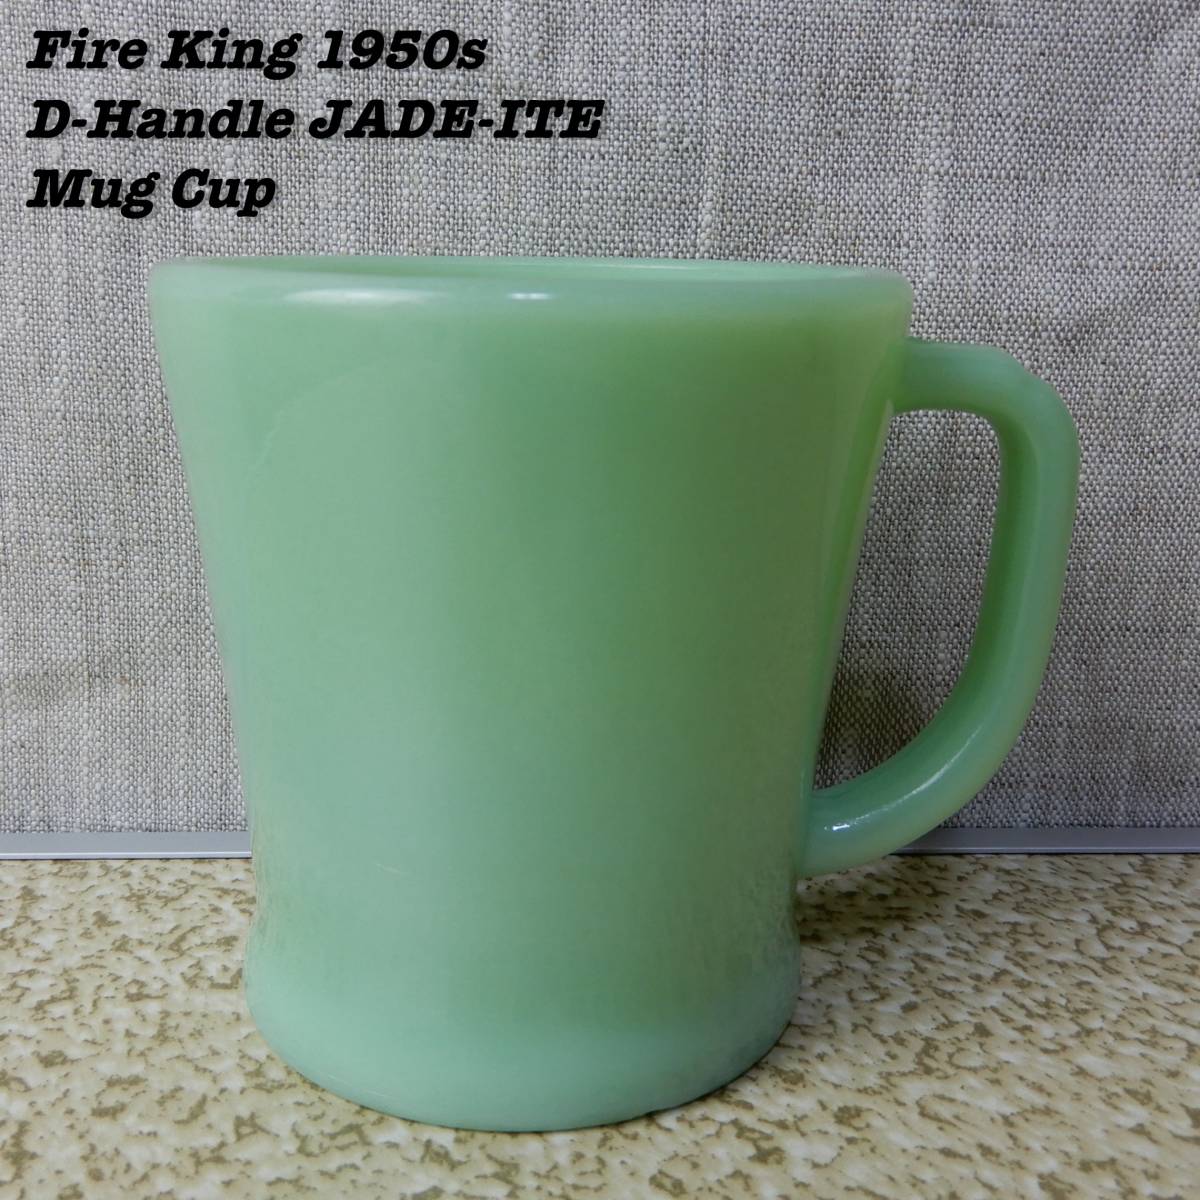 Fire King JADE-ITE D-Handle Mug Cup 1952s-1955s Flat Bottom ③ Vintage ファイヤーキング ジュダイ フラットボトム ヴィンテージ_画像1